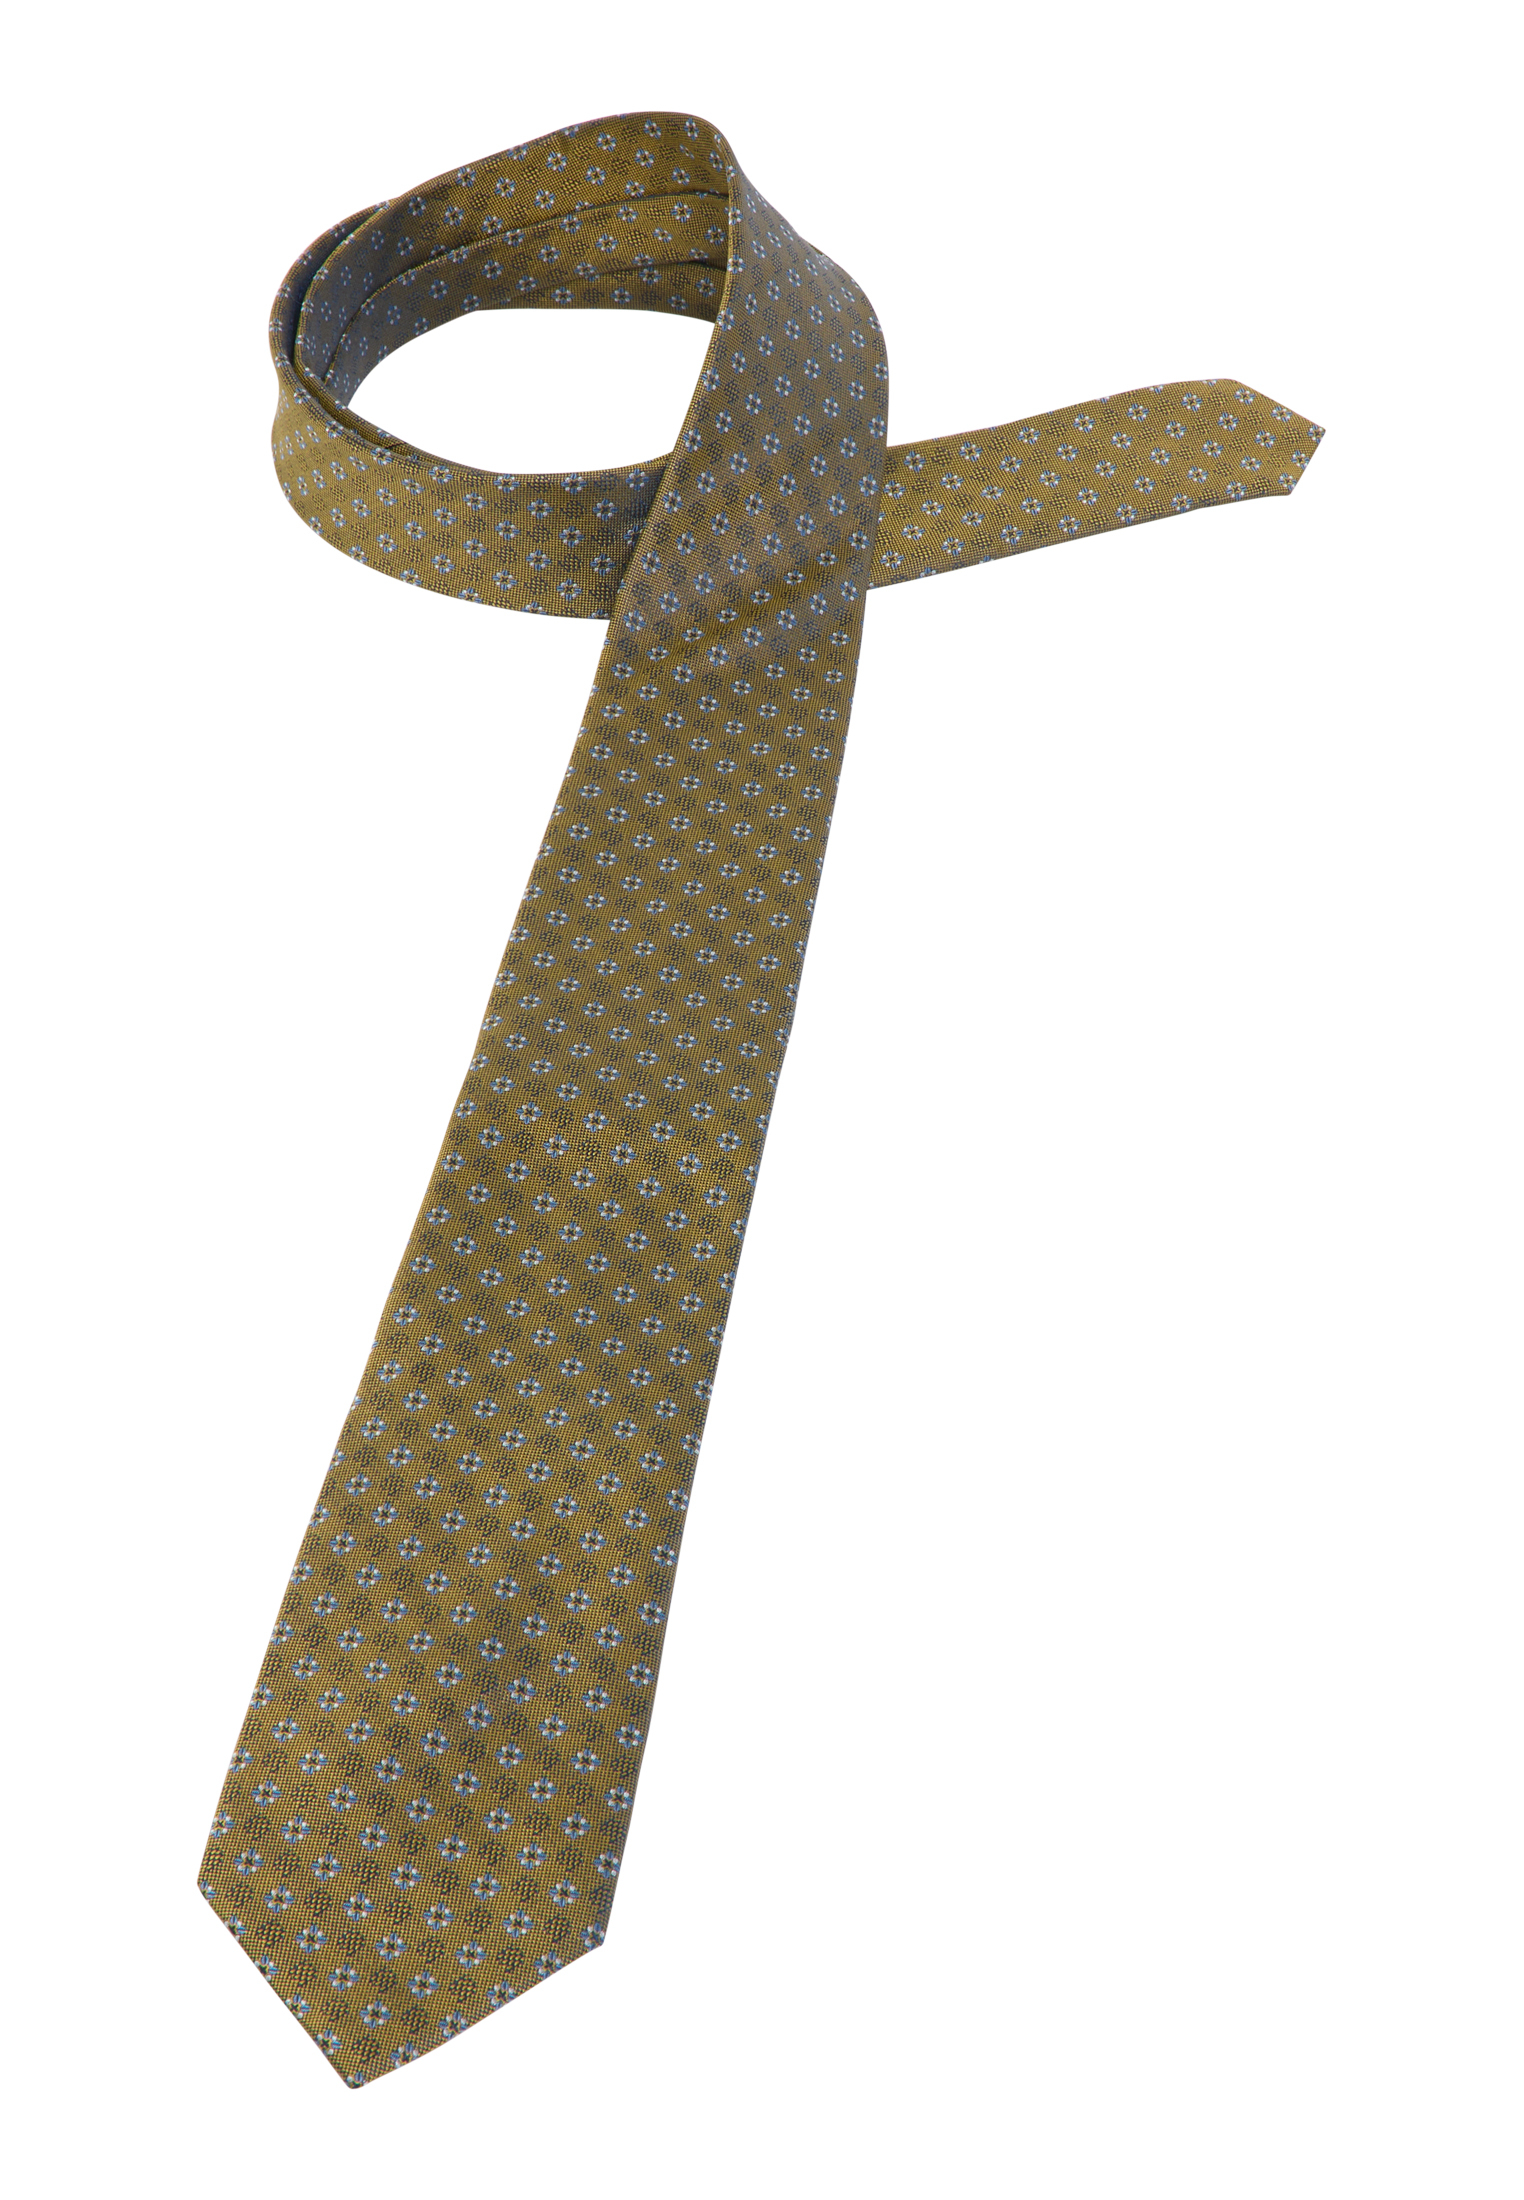 Krawatte in ocker gemustert | 142 | ocker 1AC01899-07-34-142 